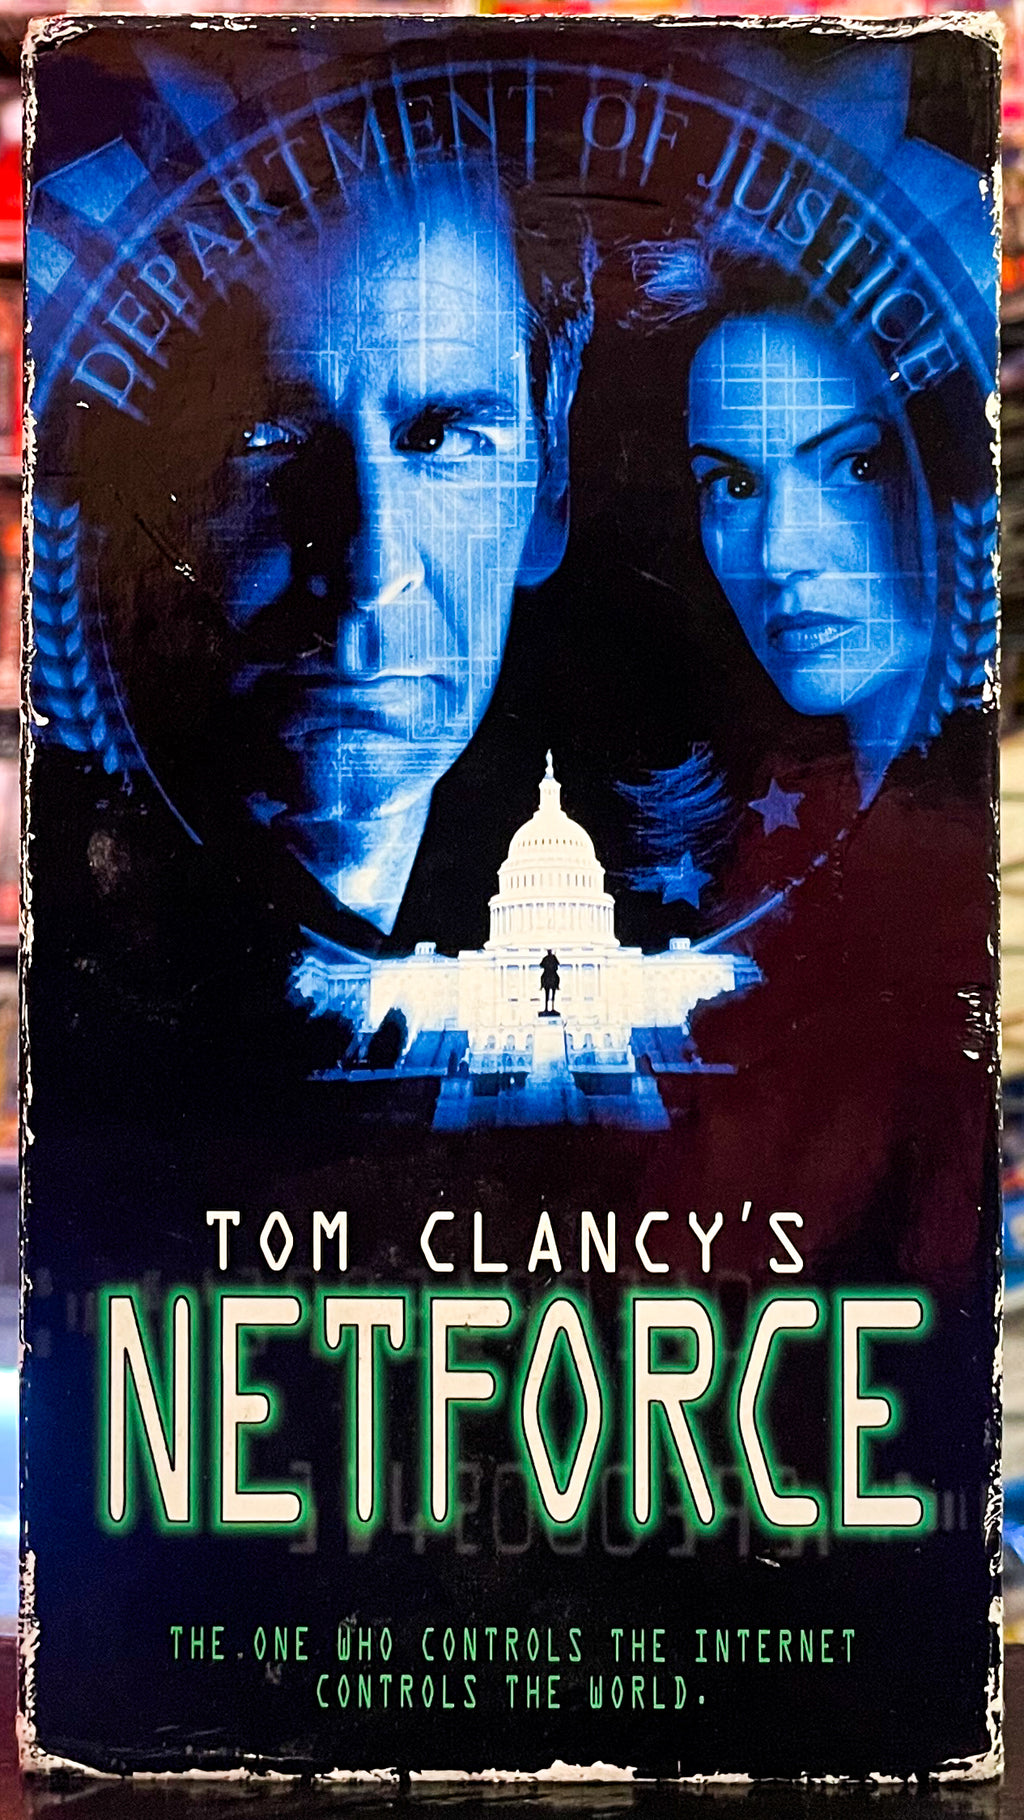 Tom Clancy’s Netforce